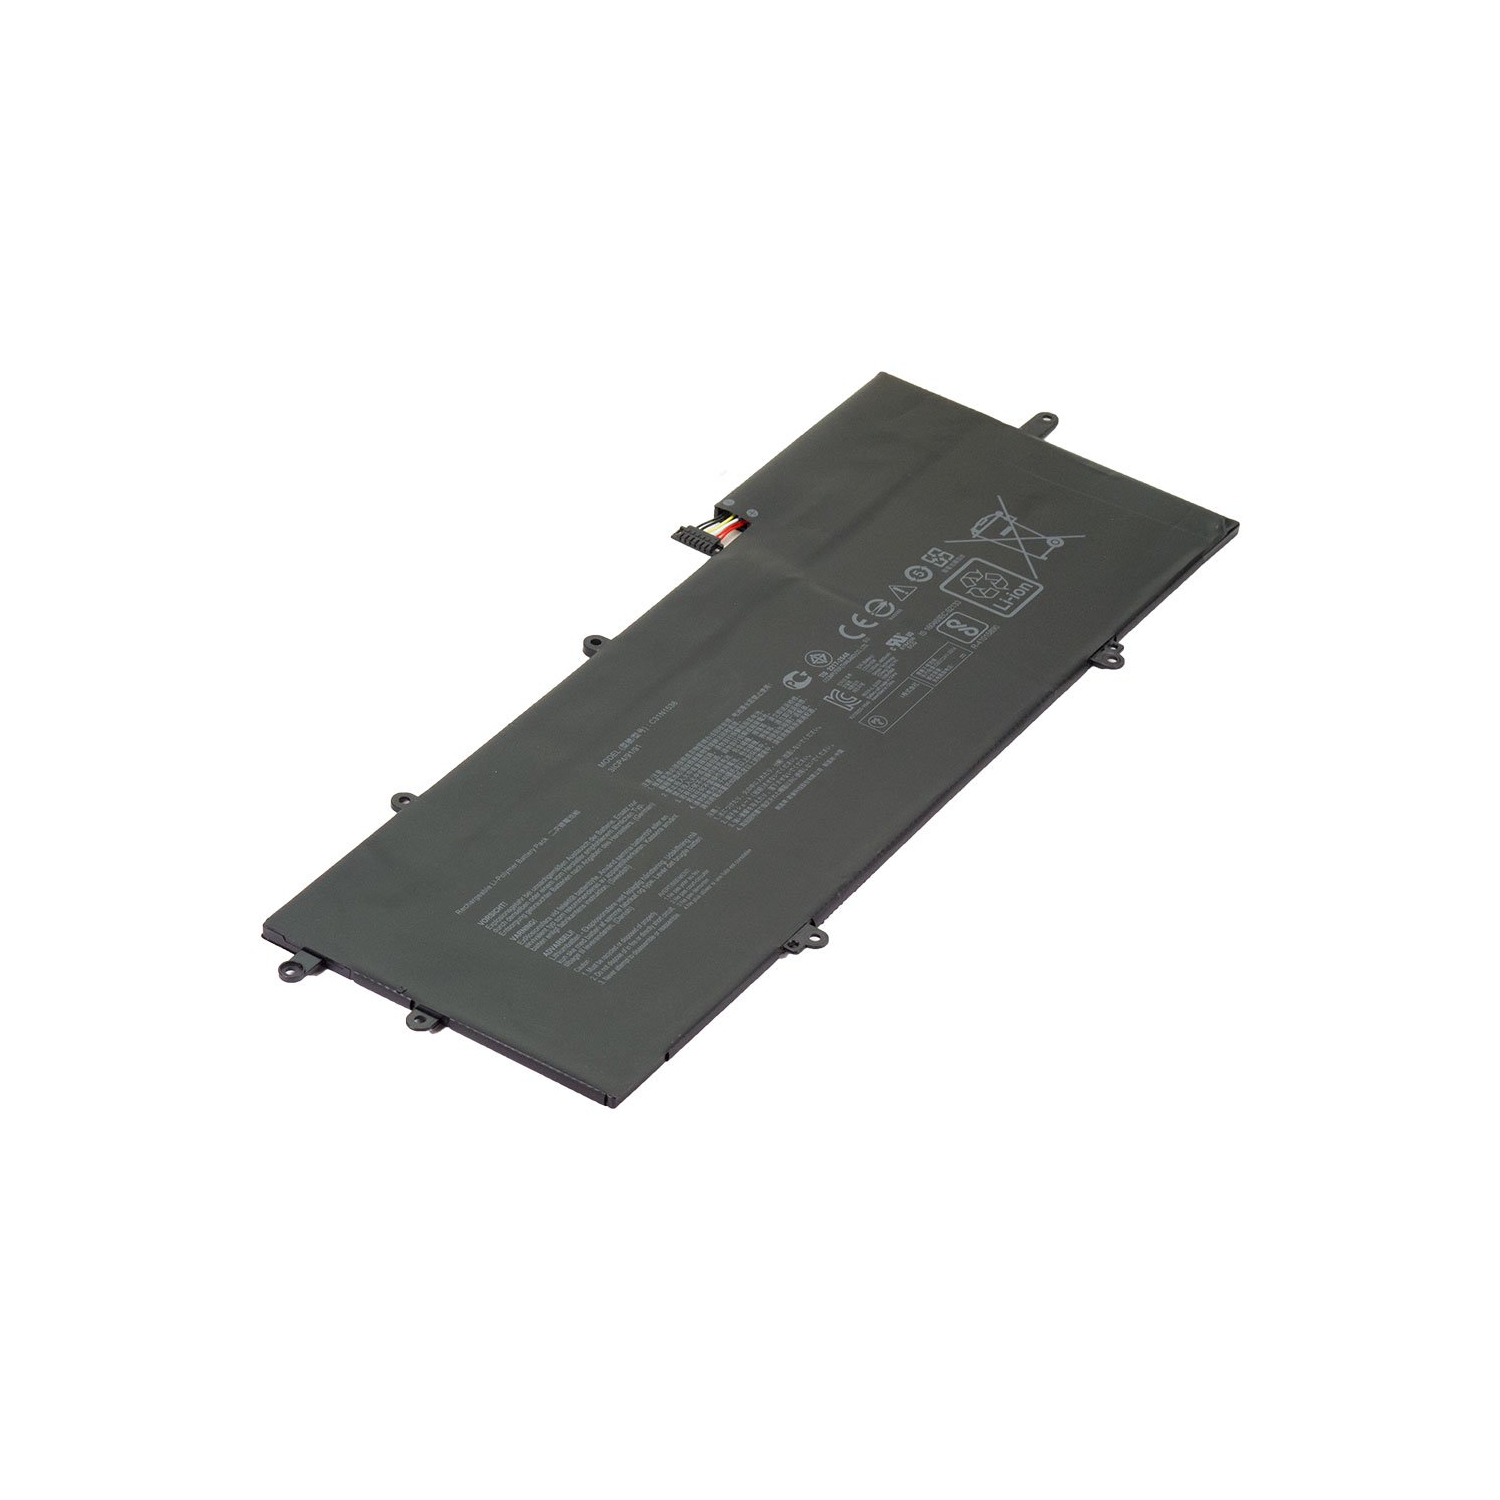 BattDepot: Brand New Laptop Battery for Asus ZenBook Flip UX360UA-1C, 0B20002080000, 0B200-02080000, C31N1538